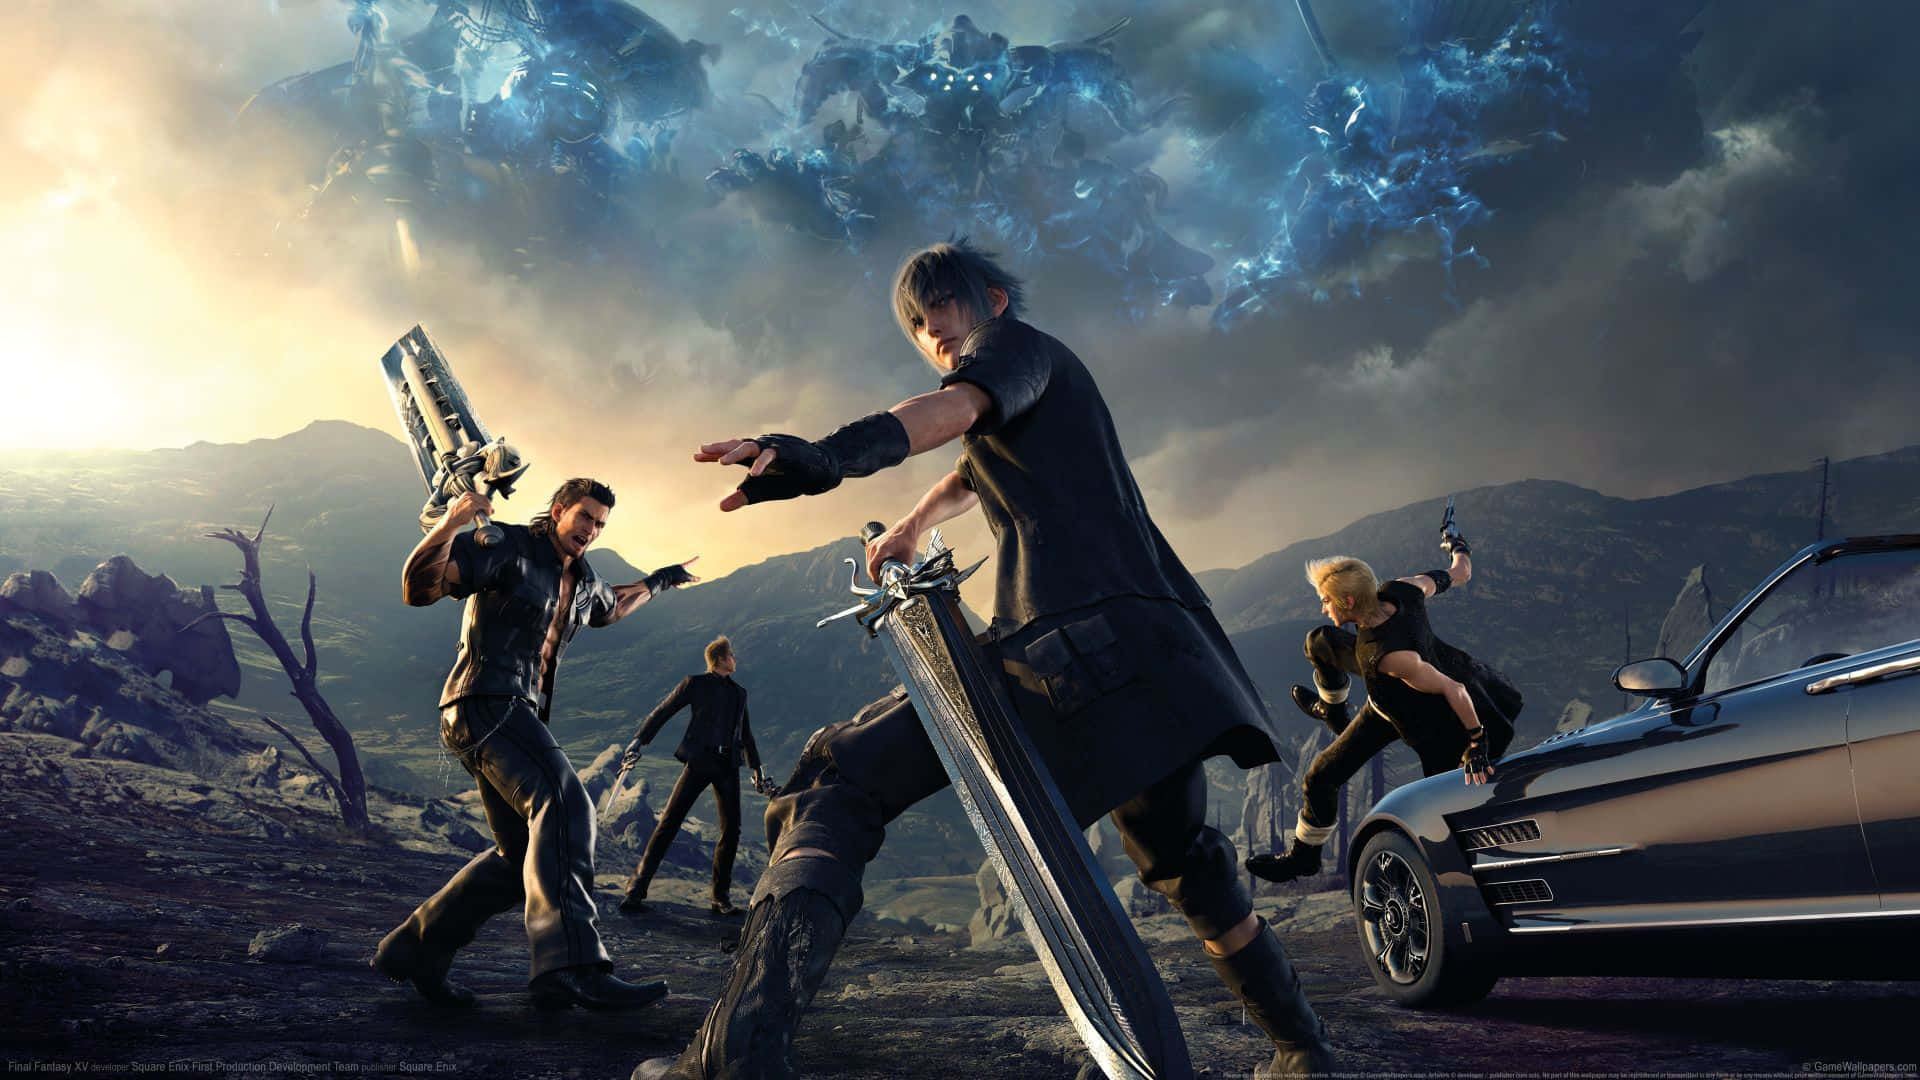 Explore the breathtaking world of Final Fantasy XV